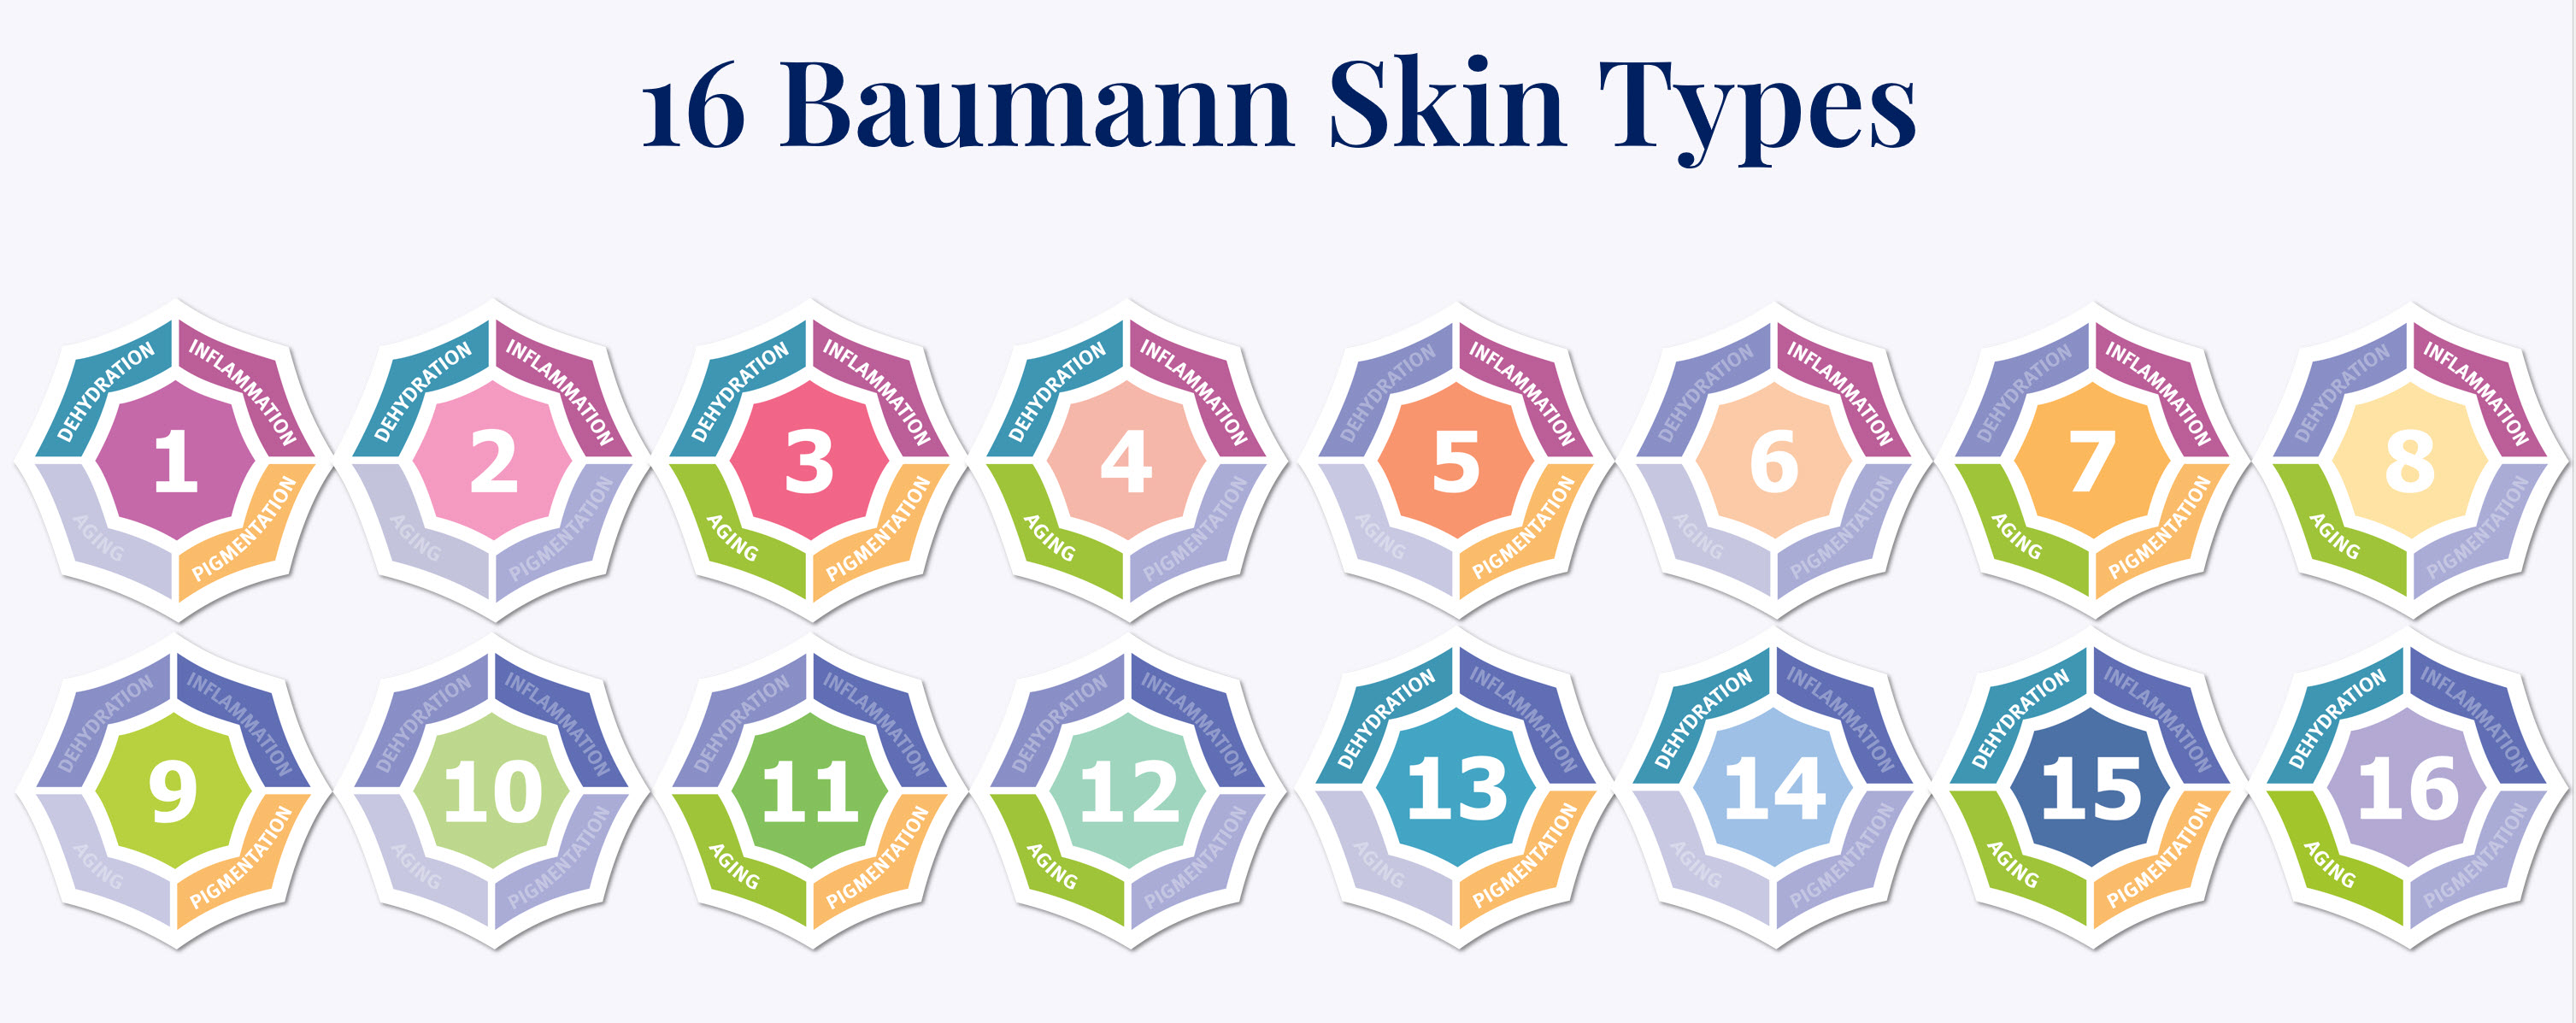 16 Baumann skin types